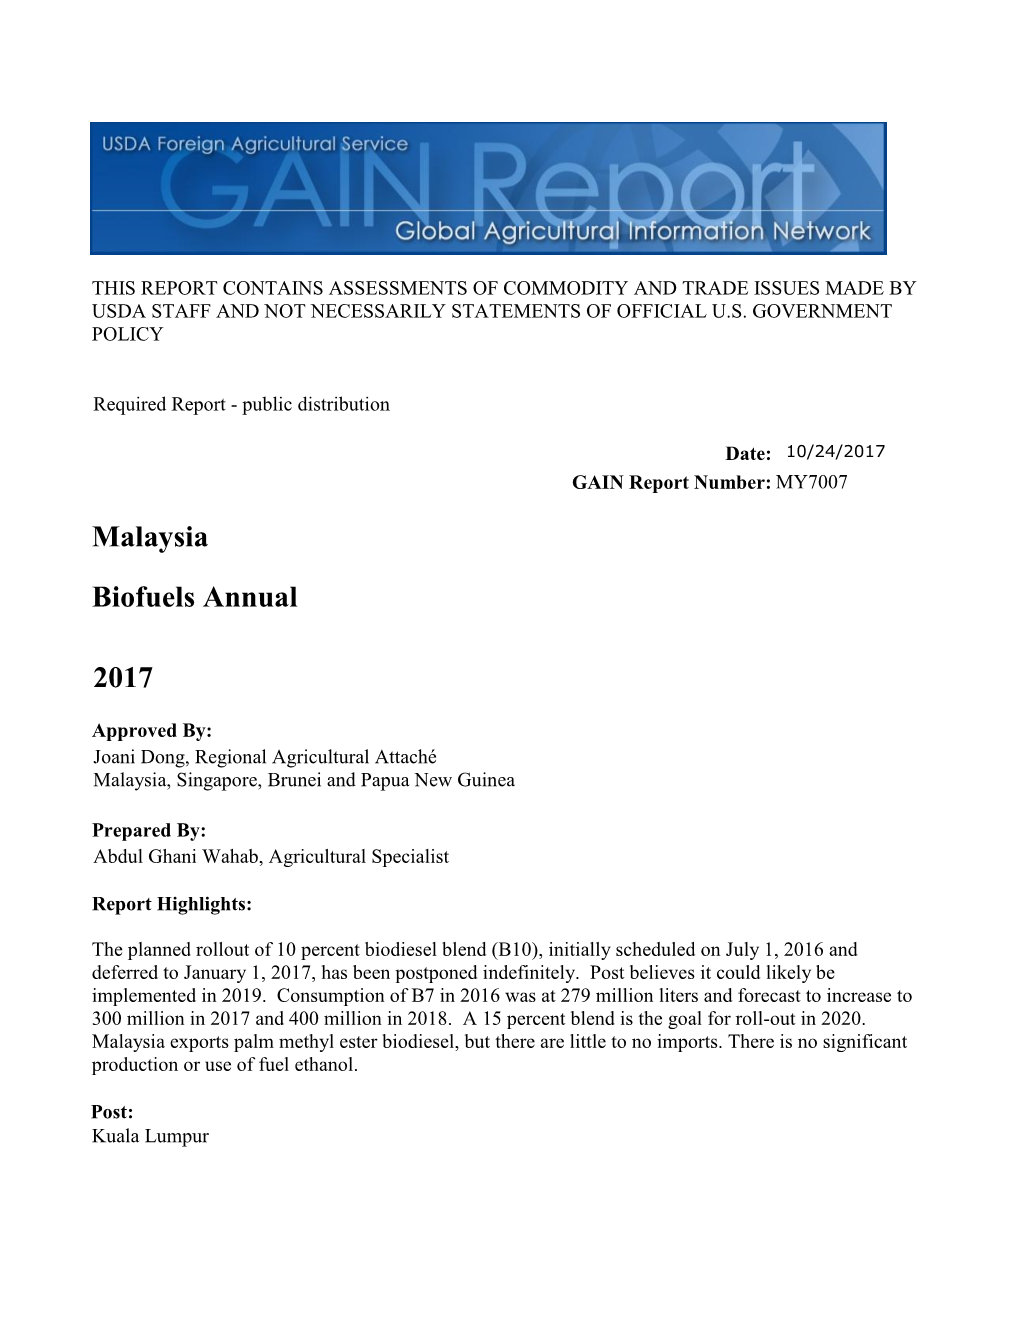 Malaysia Biofuels Annual 2017 (GAIN)